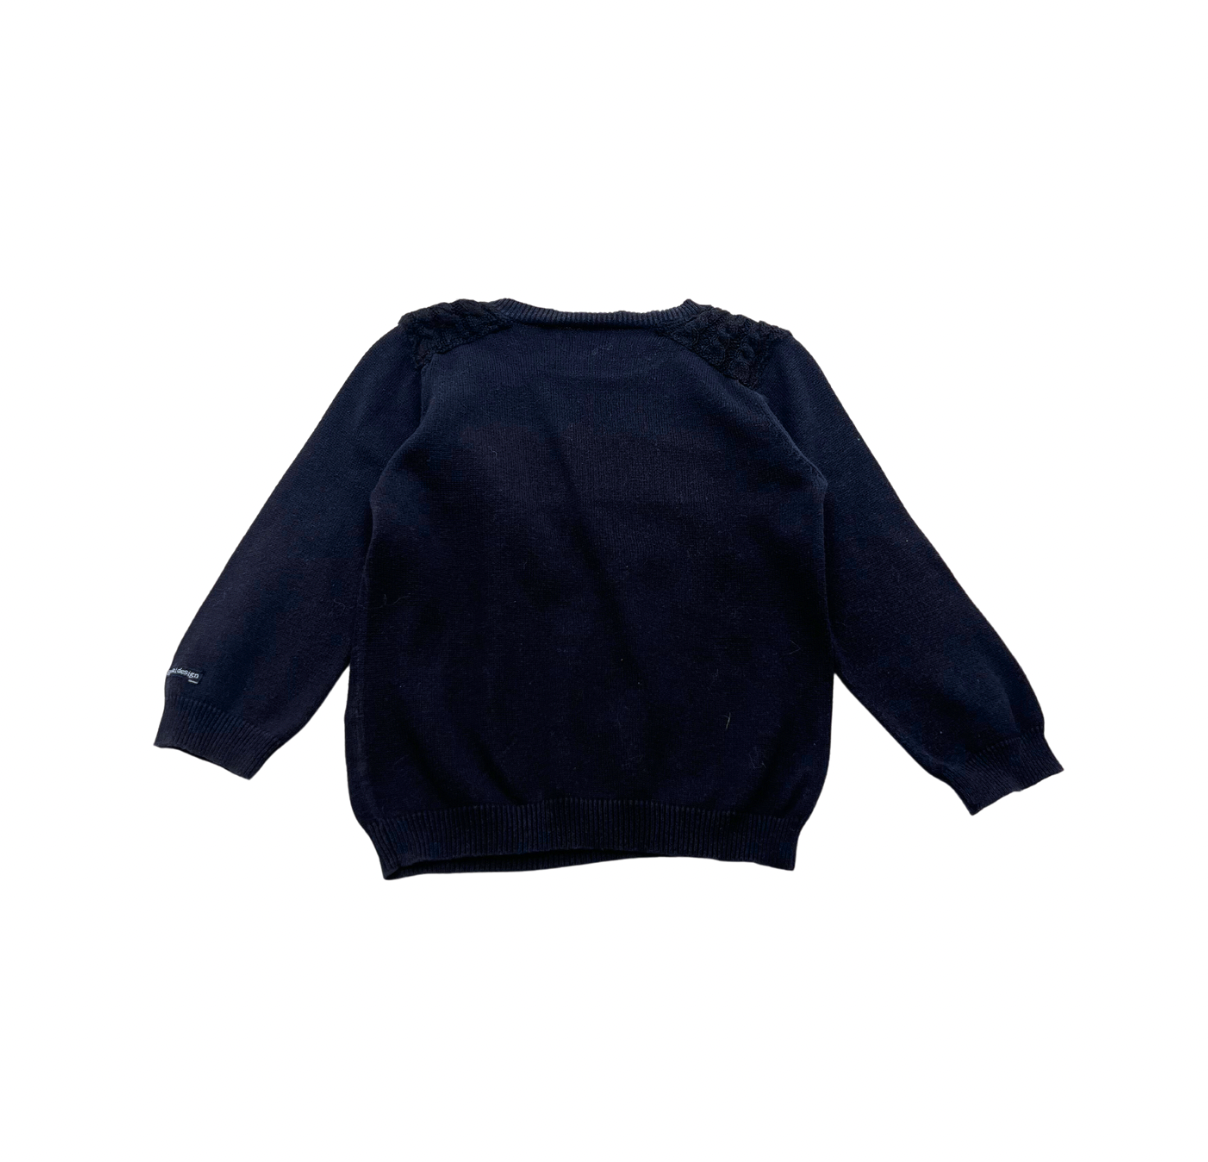 IKKS - Unique sweater - 18 months